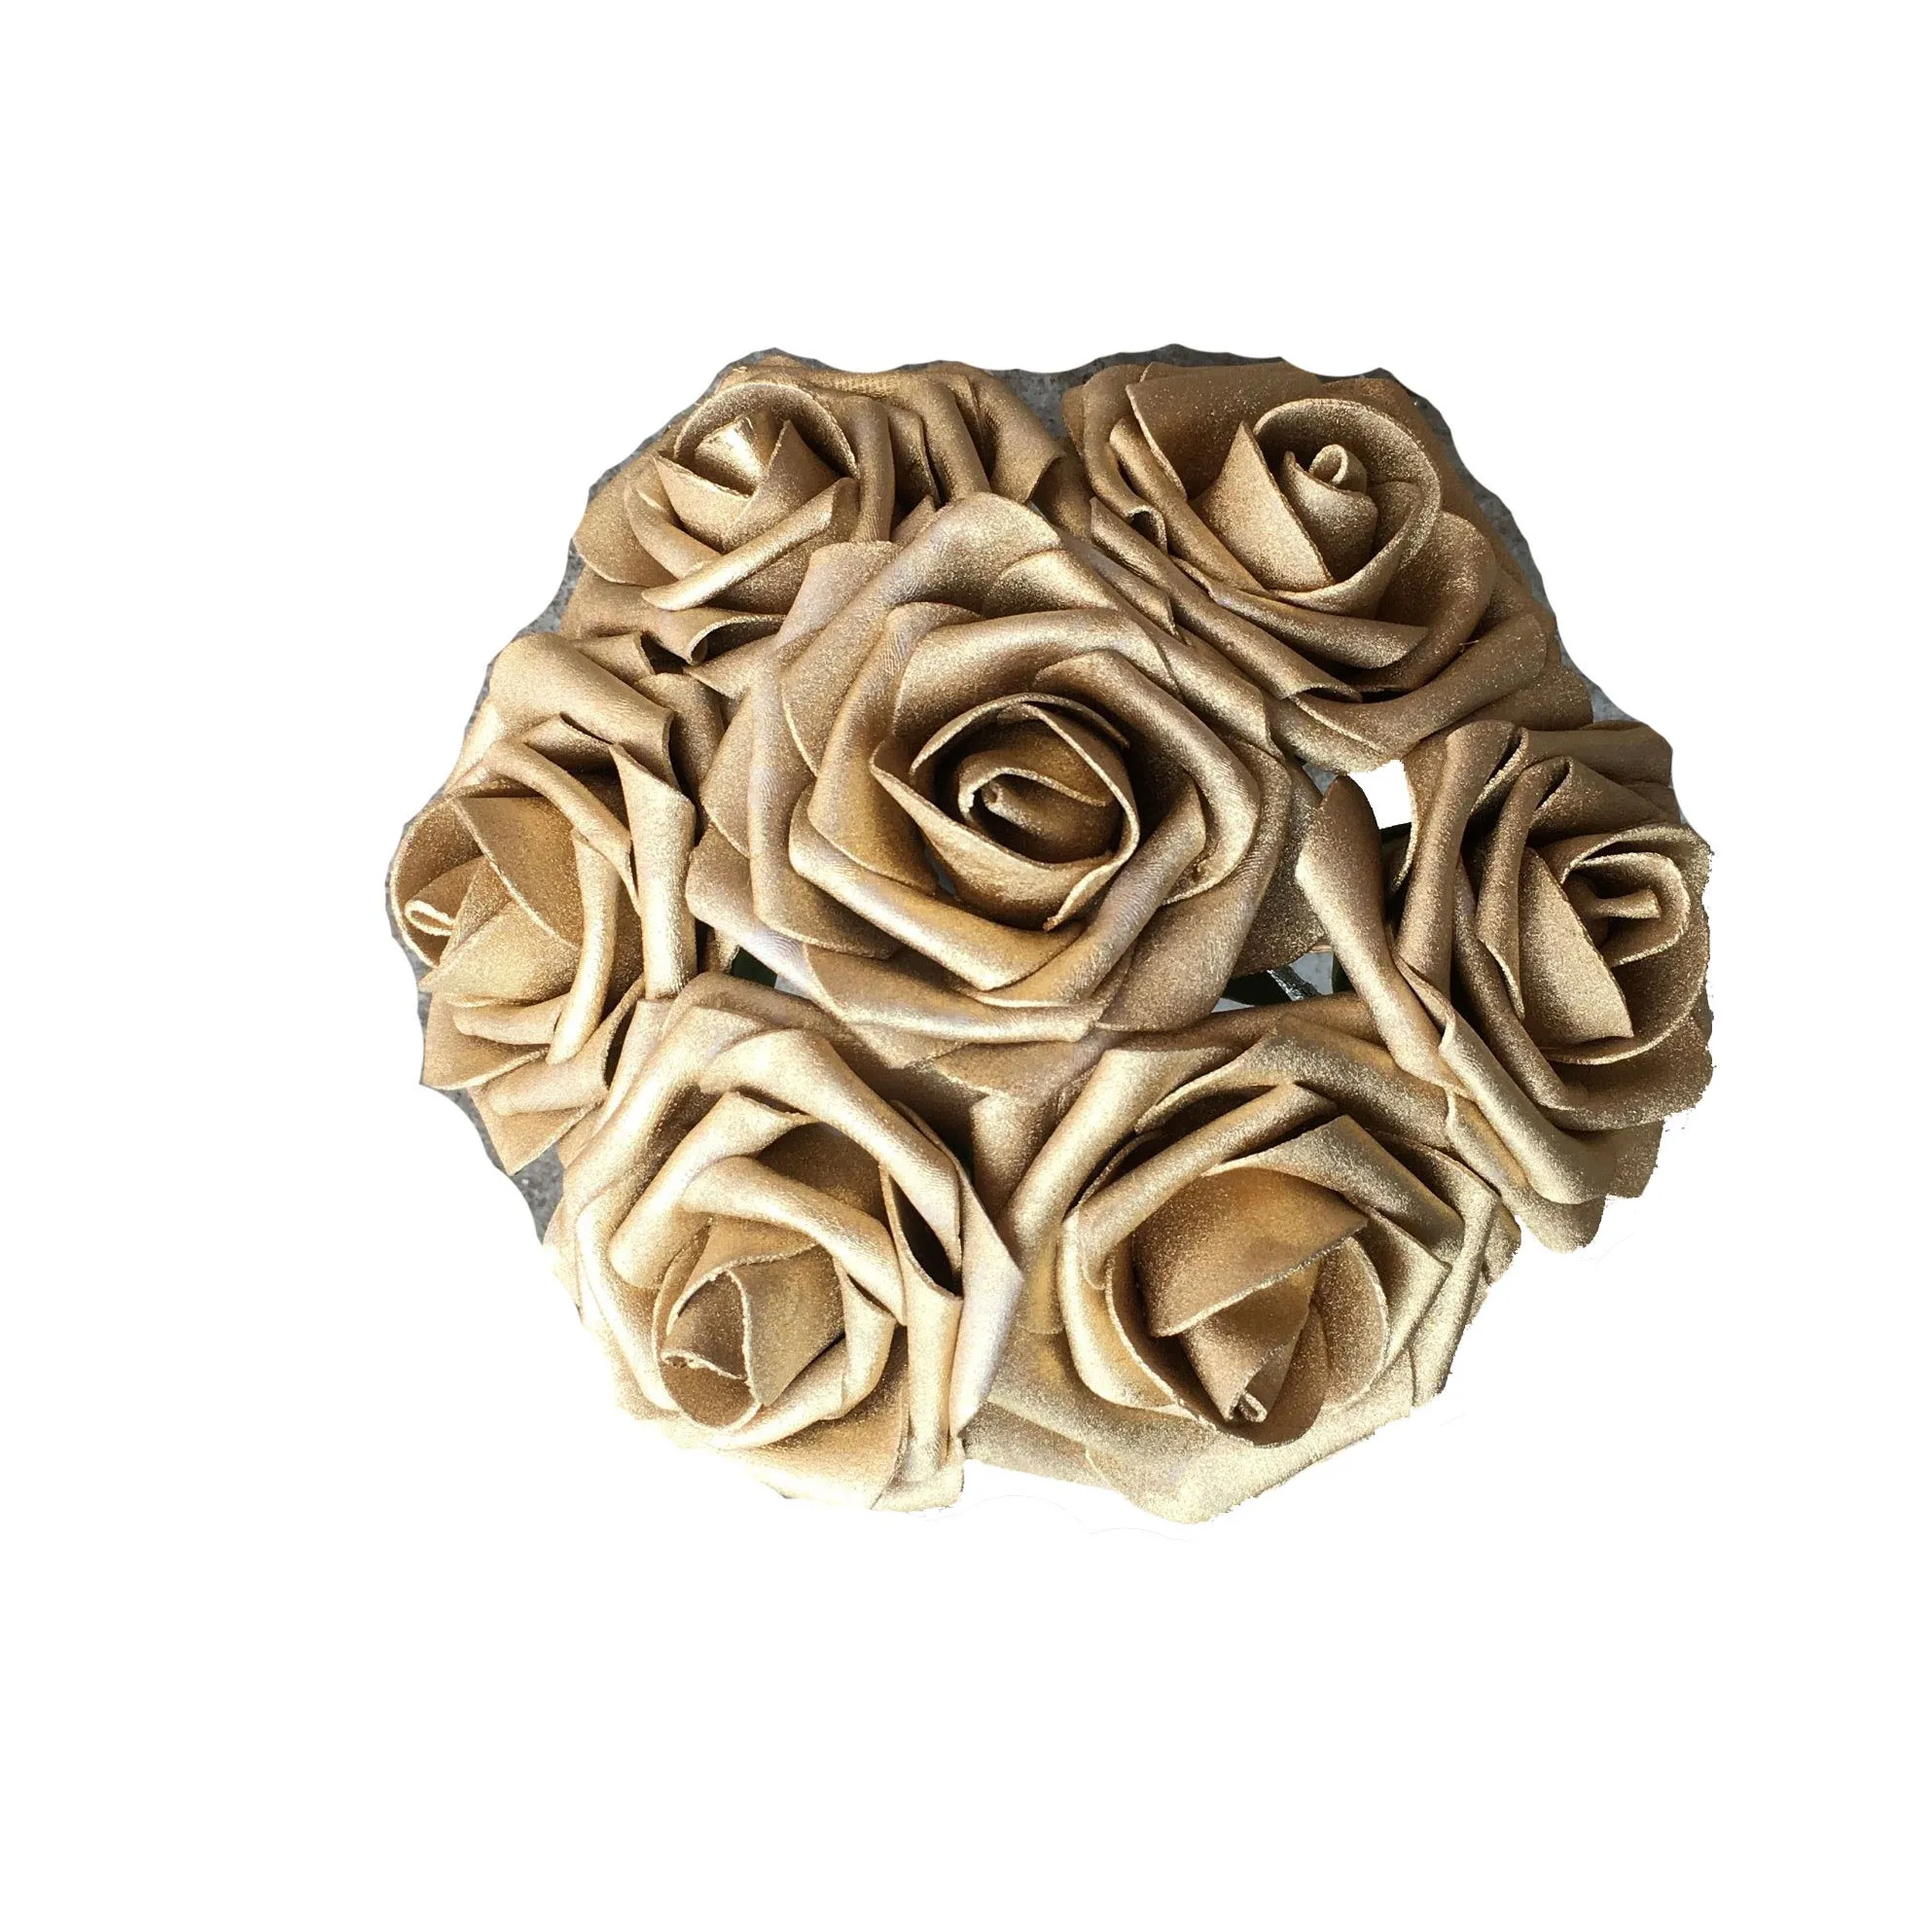 10-100 Artificial Foam Roses Flowers With Stem Wedding Bride Bouquet Home Decor 